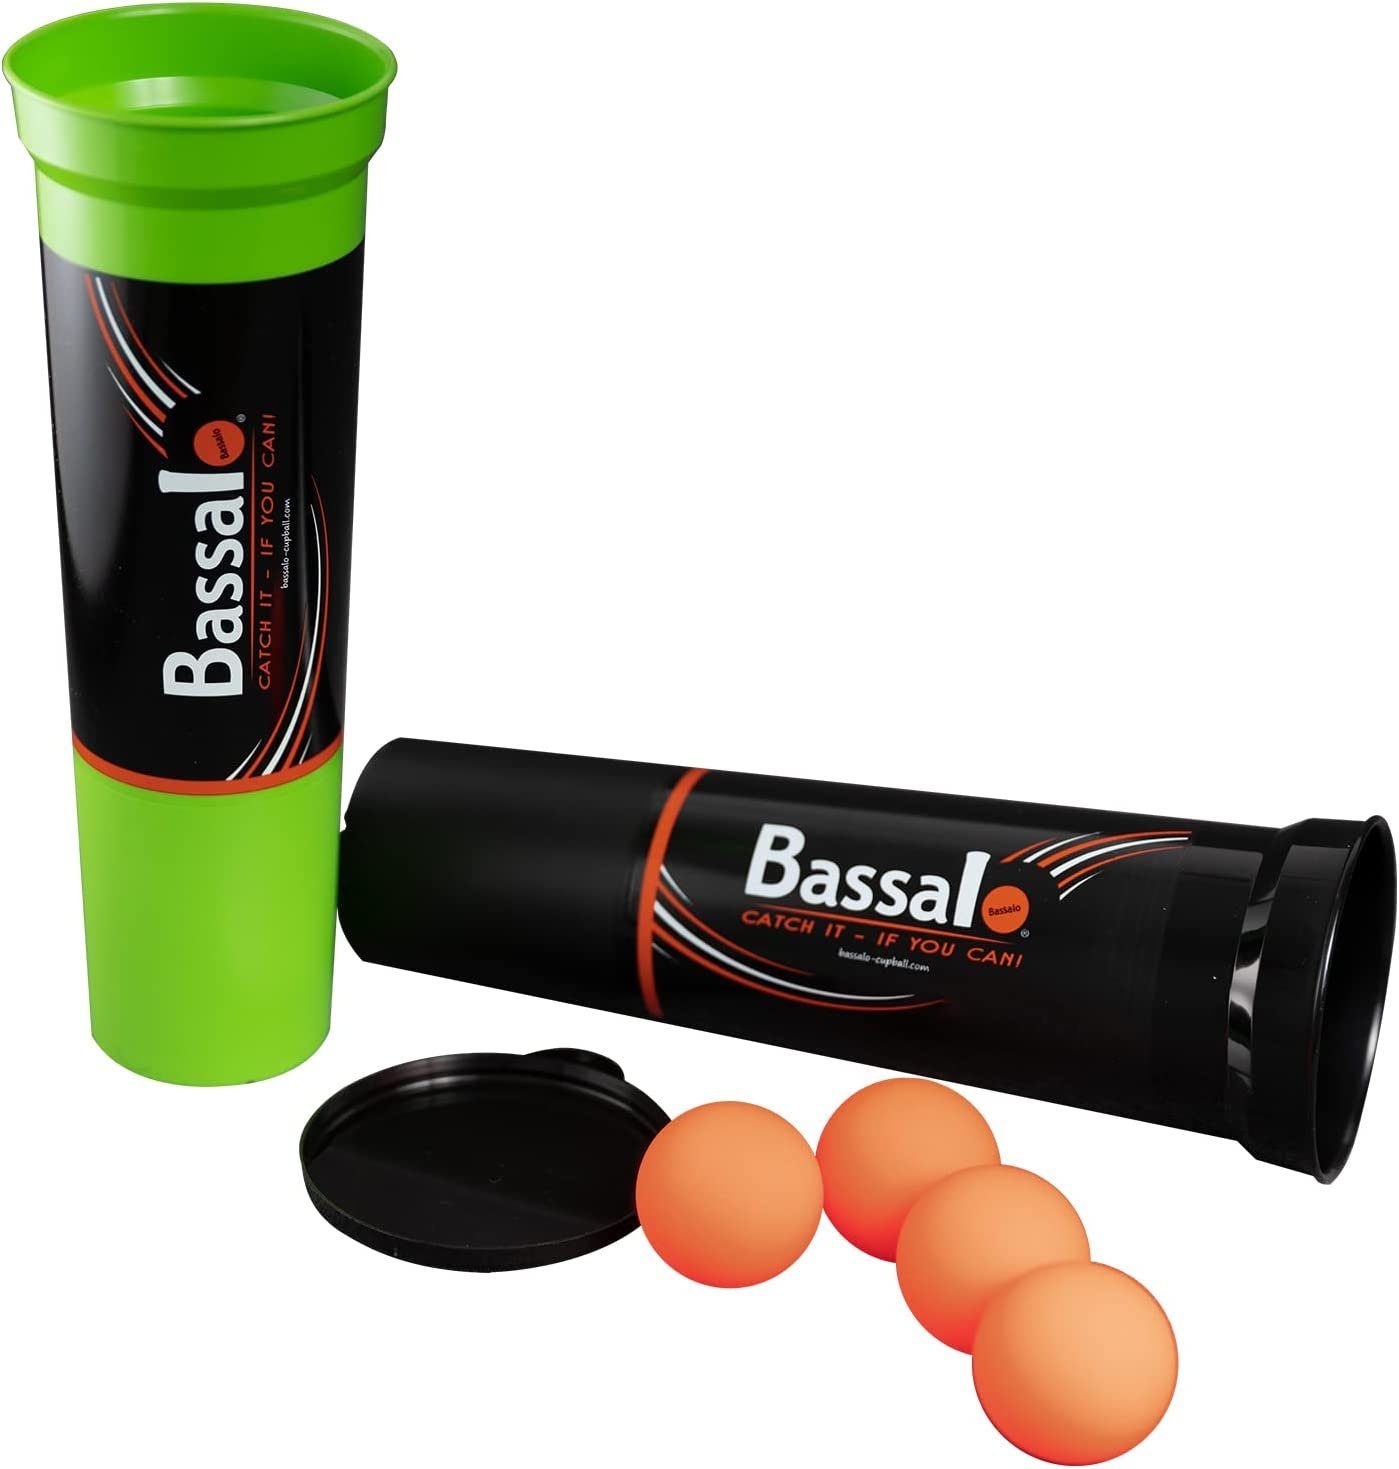 2er Bassalo Made und - Germany Plus Bälle, Outdoor 2 in Indoor, Cupball Spielanleitung, Becher, 4 Spielball Starter-Set